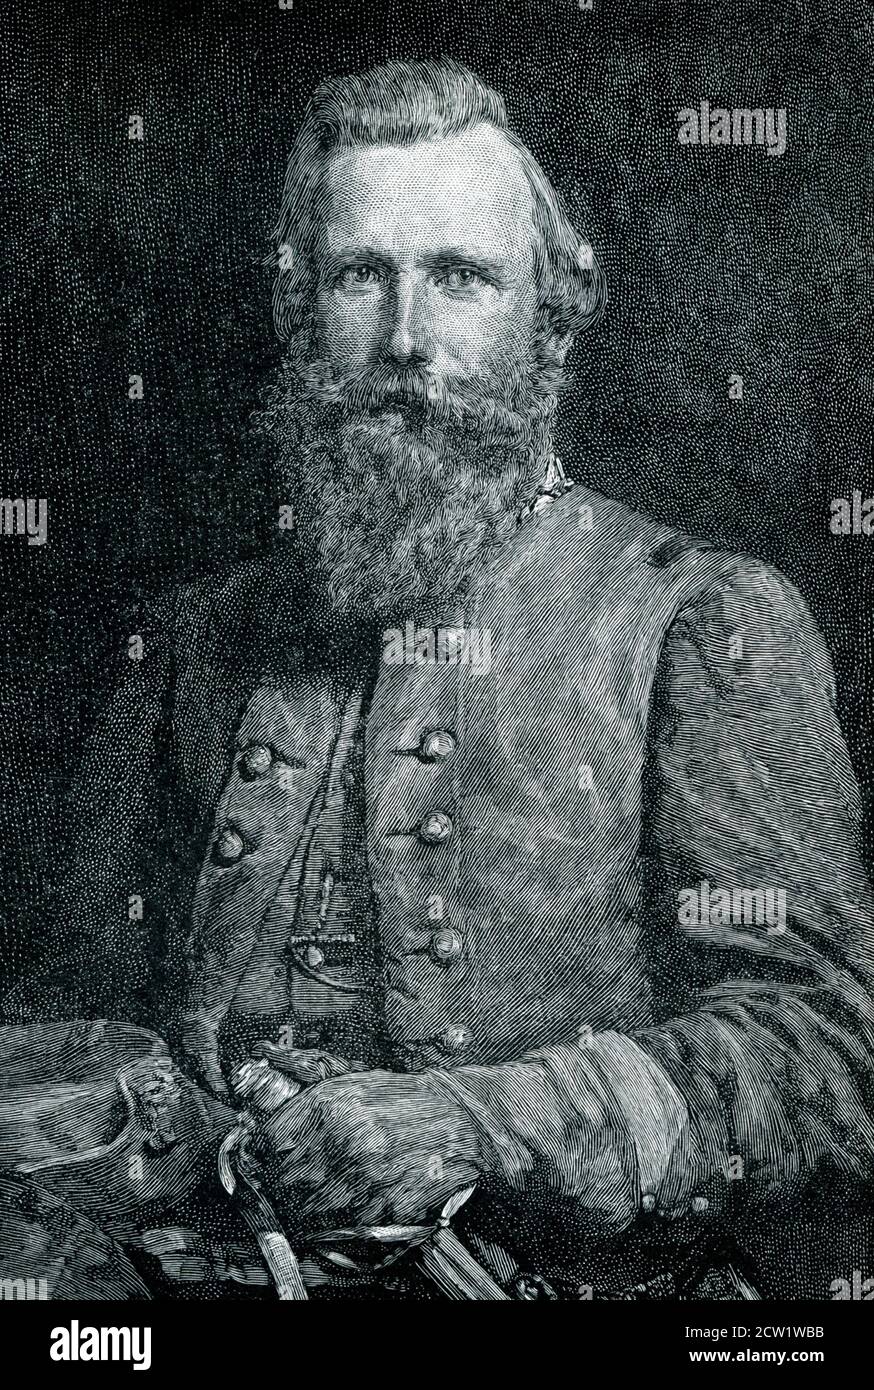 U S Lee Stonewall Jackson Jeb Stuart Longstreet Beauregard Bragg Civil War Beards and Generals Sweatshirt Confederate South Robert E